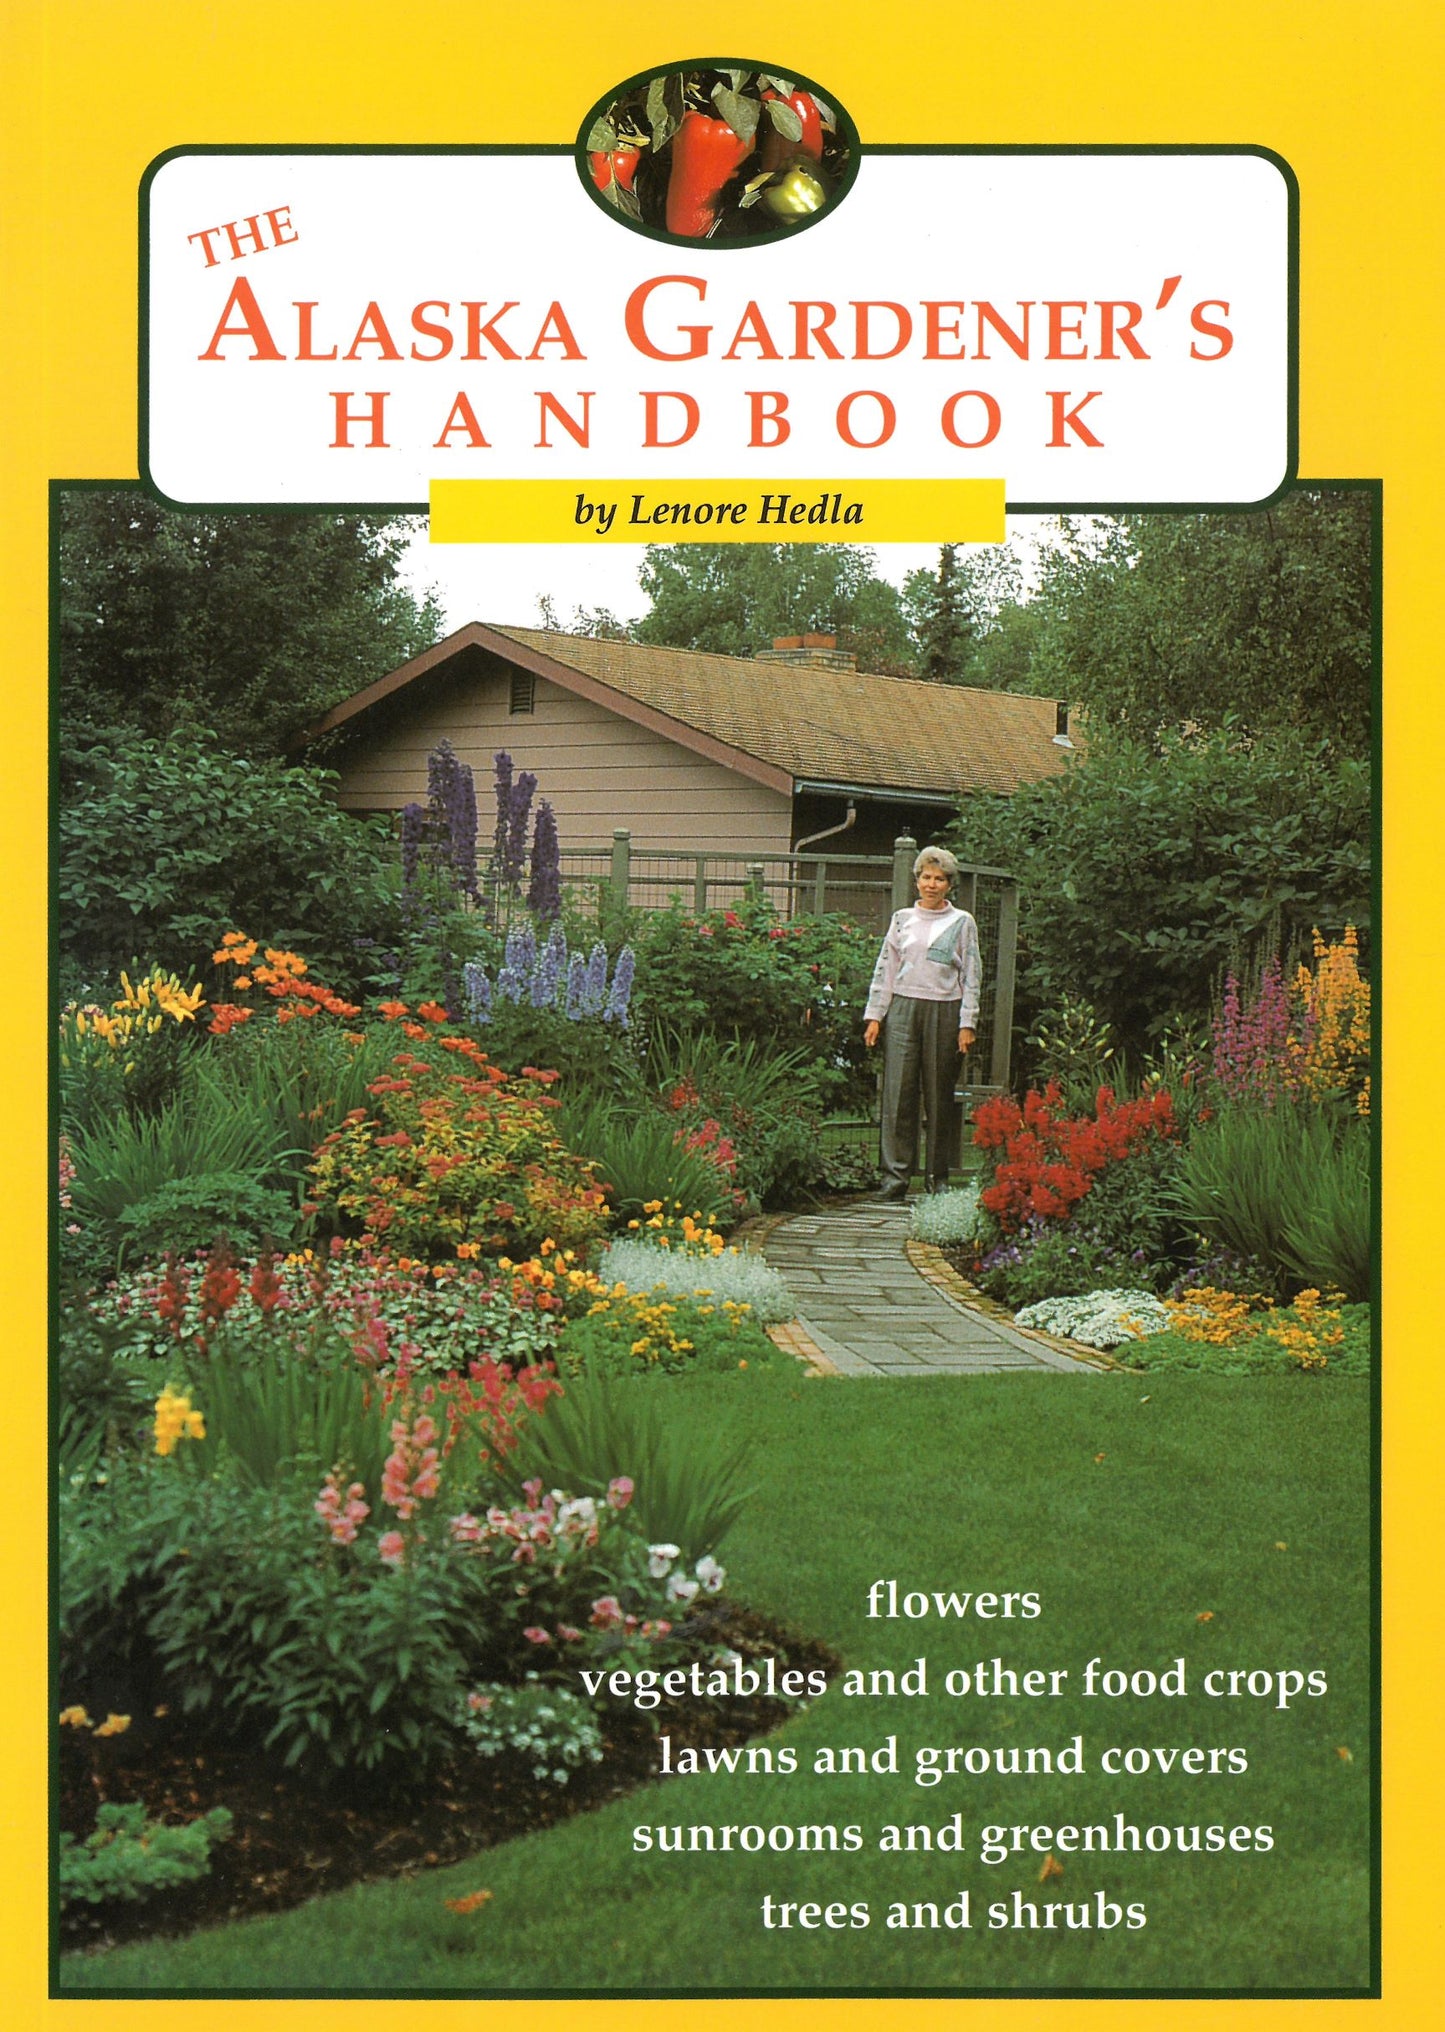 The Alaska Gardener's Handbook by Lenore Hedla